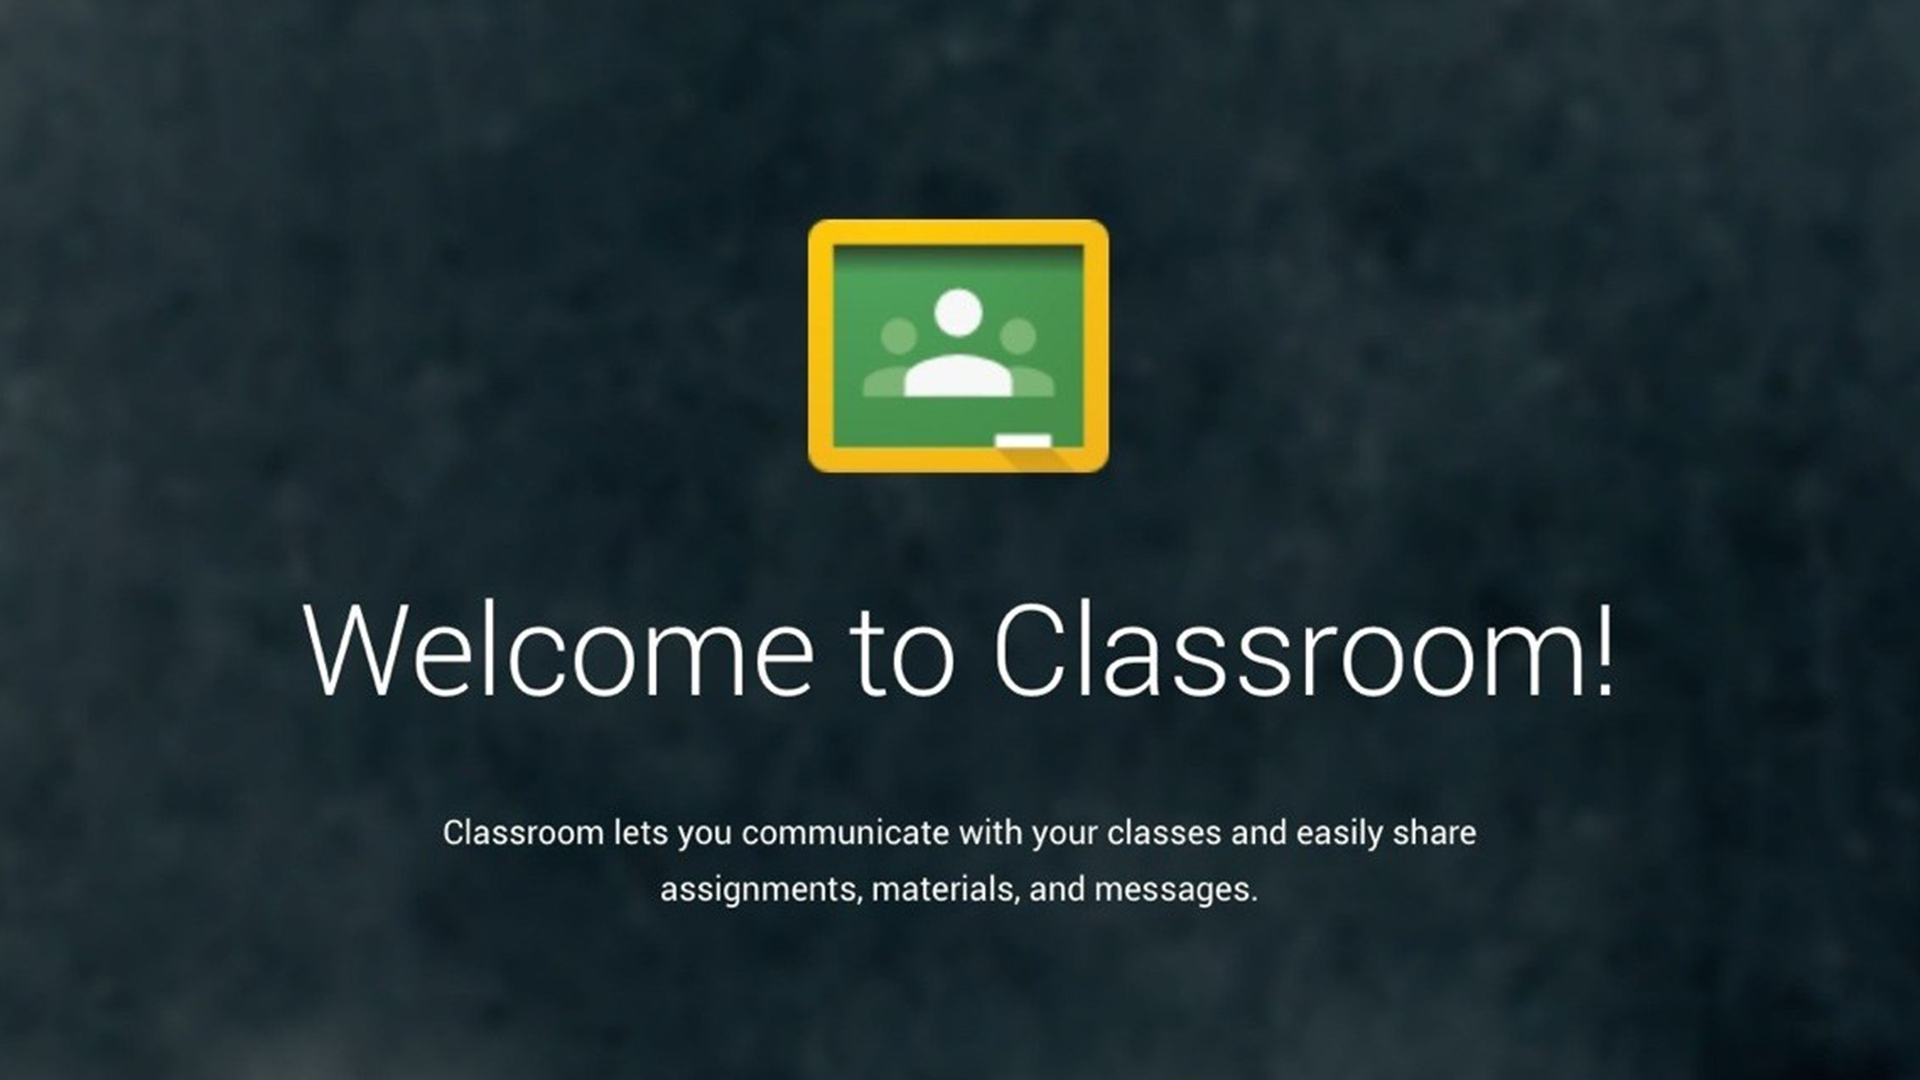 Https google класс. Классрум. Google Classroom. Google Classroom класс. Classroom.com.